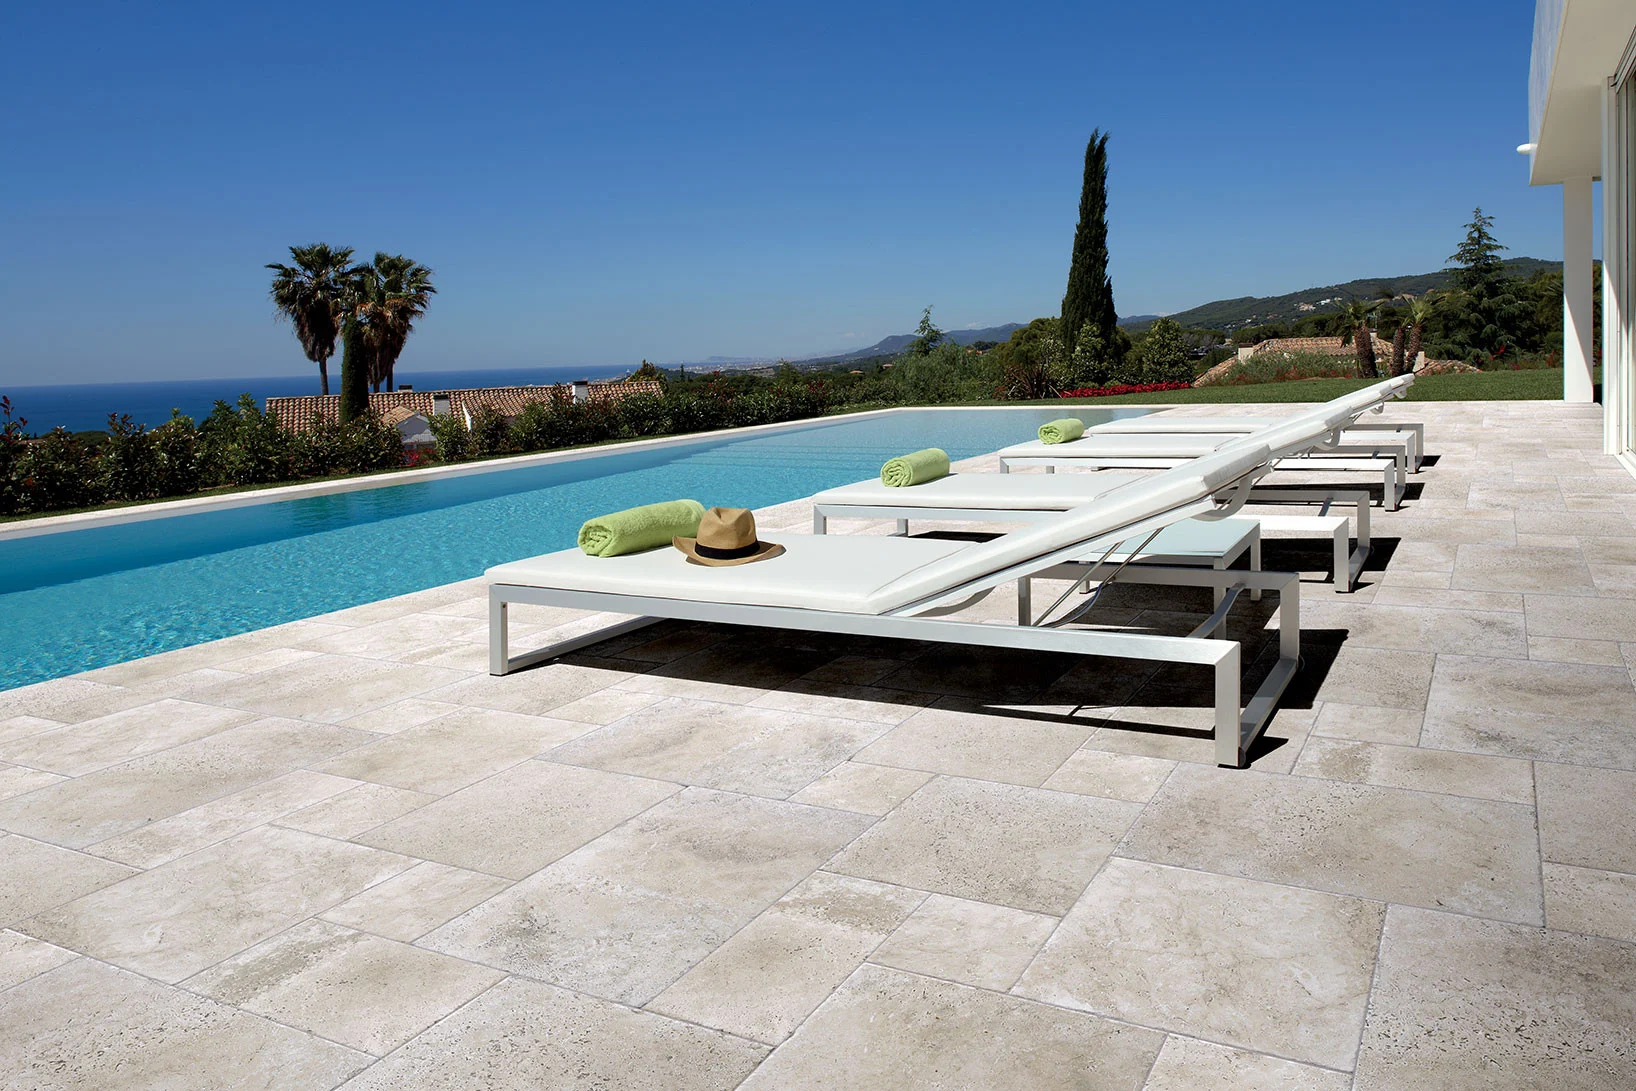 Terrasse de piscine avec carrelage aspect pierre harmonieux